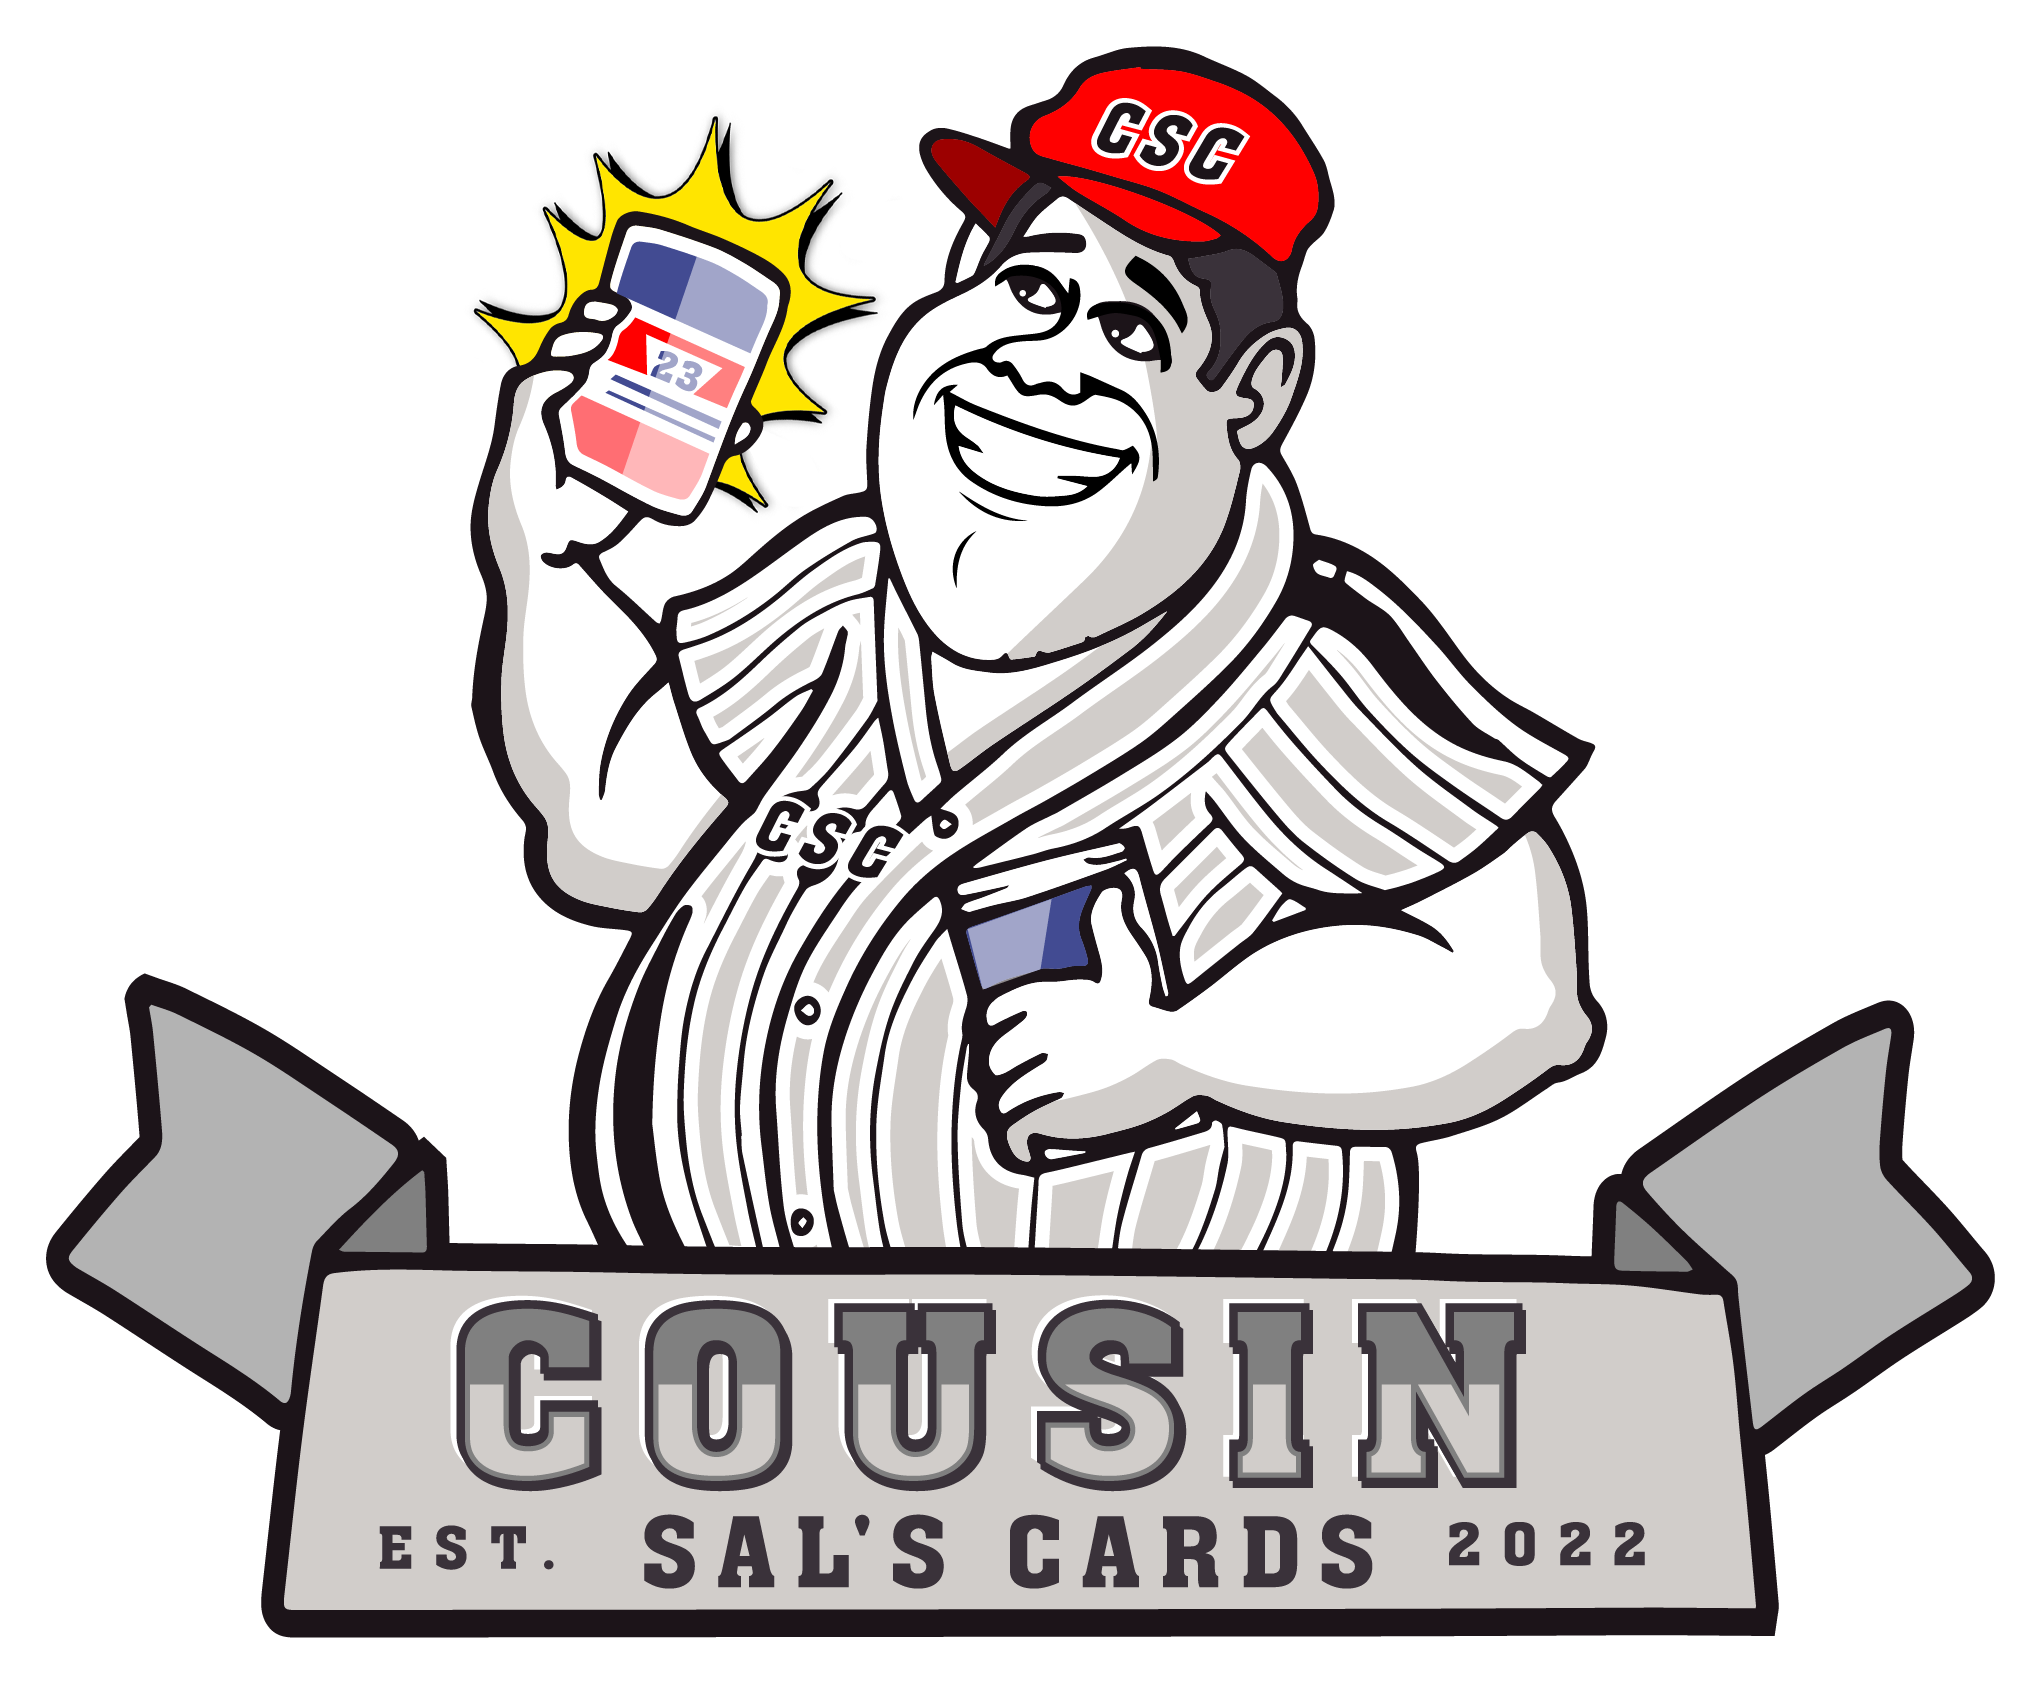 Cousin Sal’s Cards